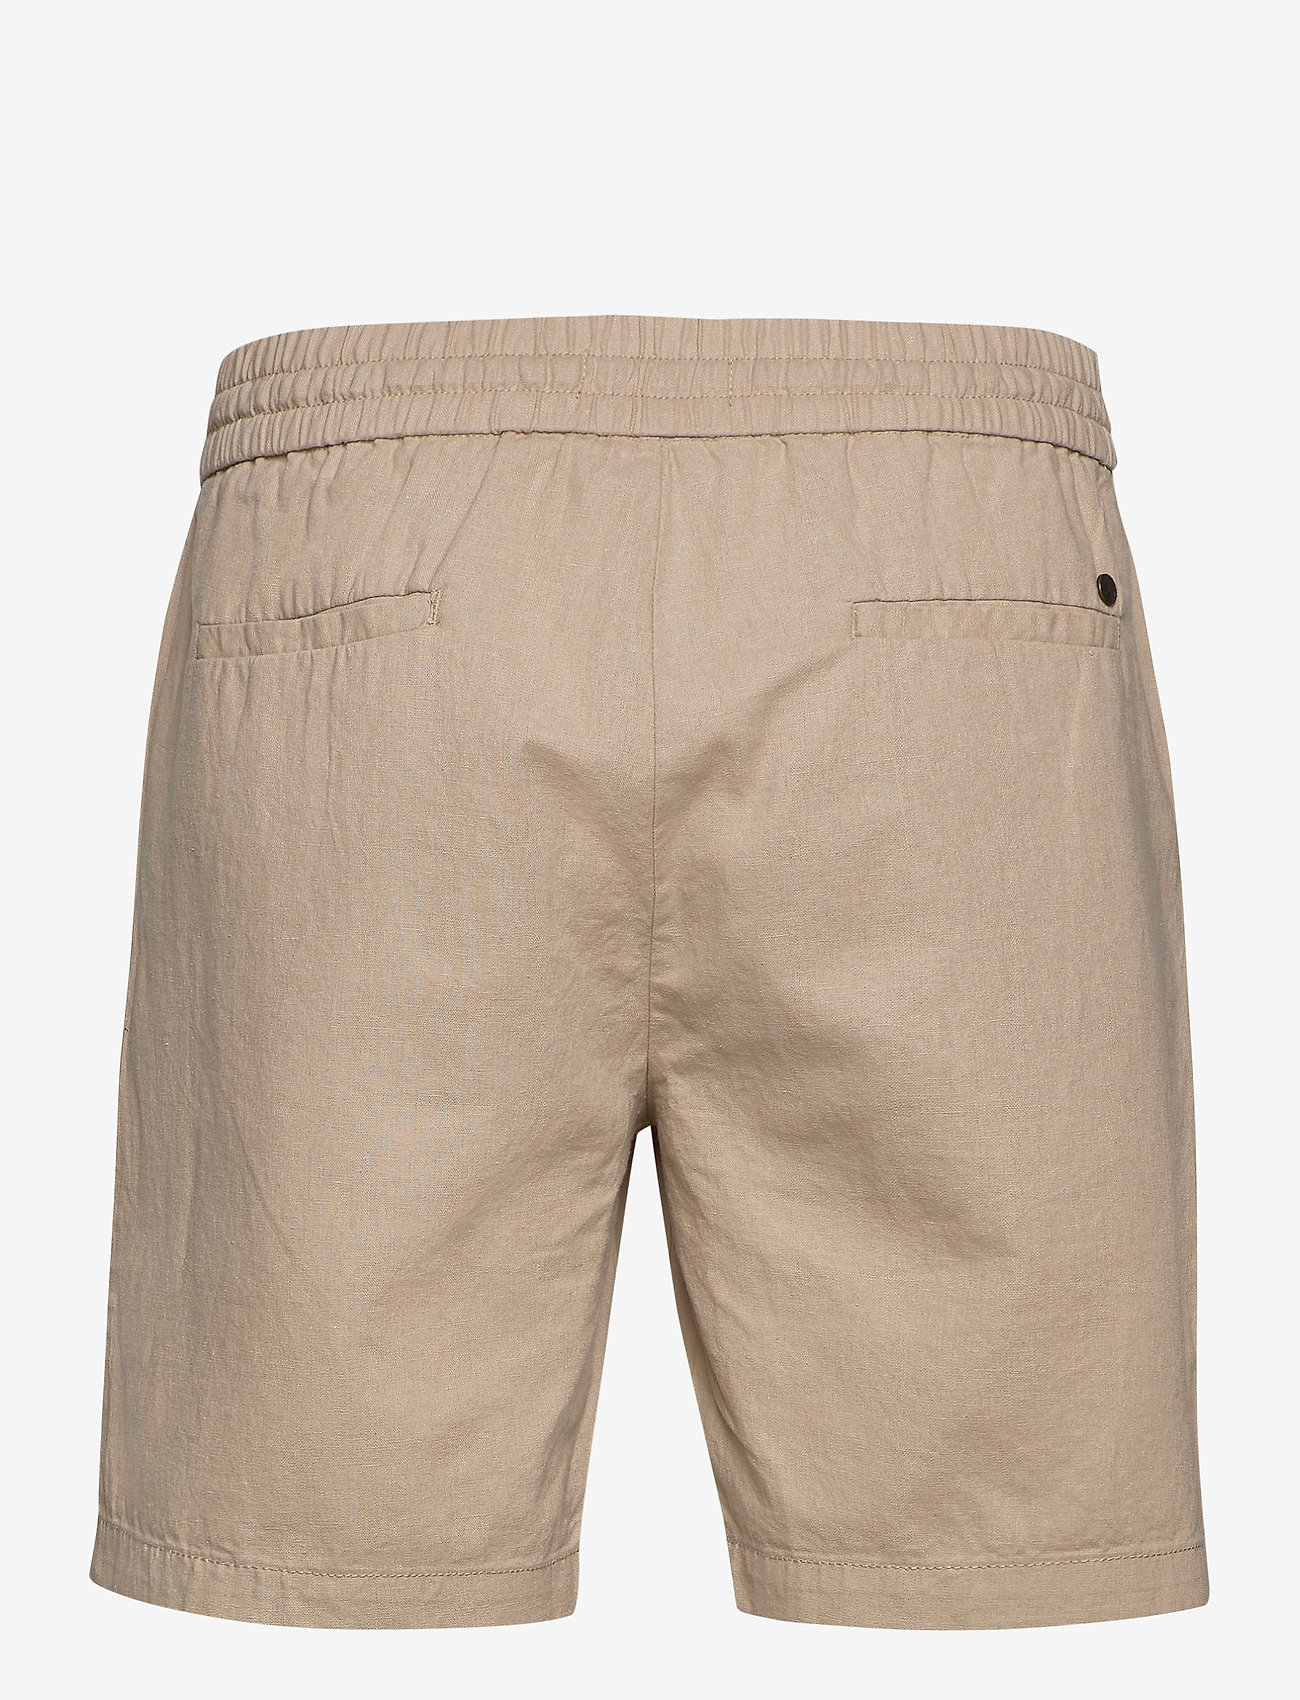 Clean Cut Copenhagen - Barcelona Cotton / Linen Shorts - linshorts - khaki - 1